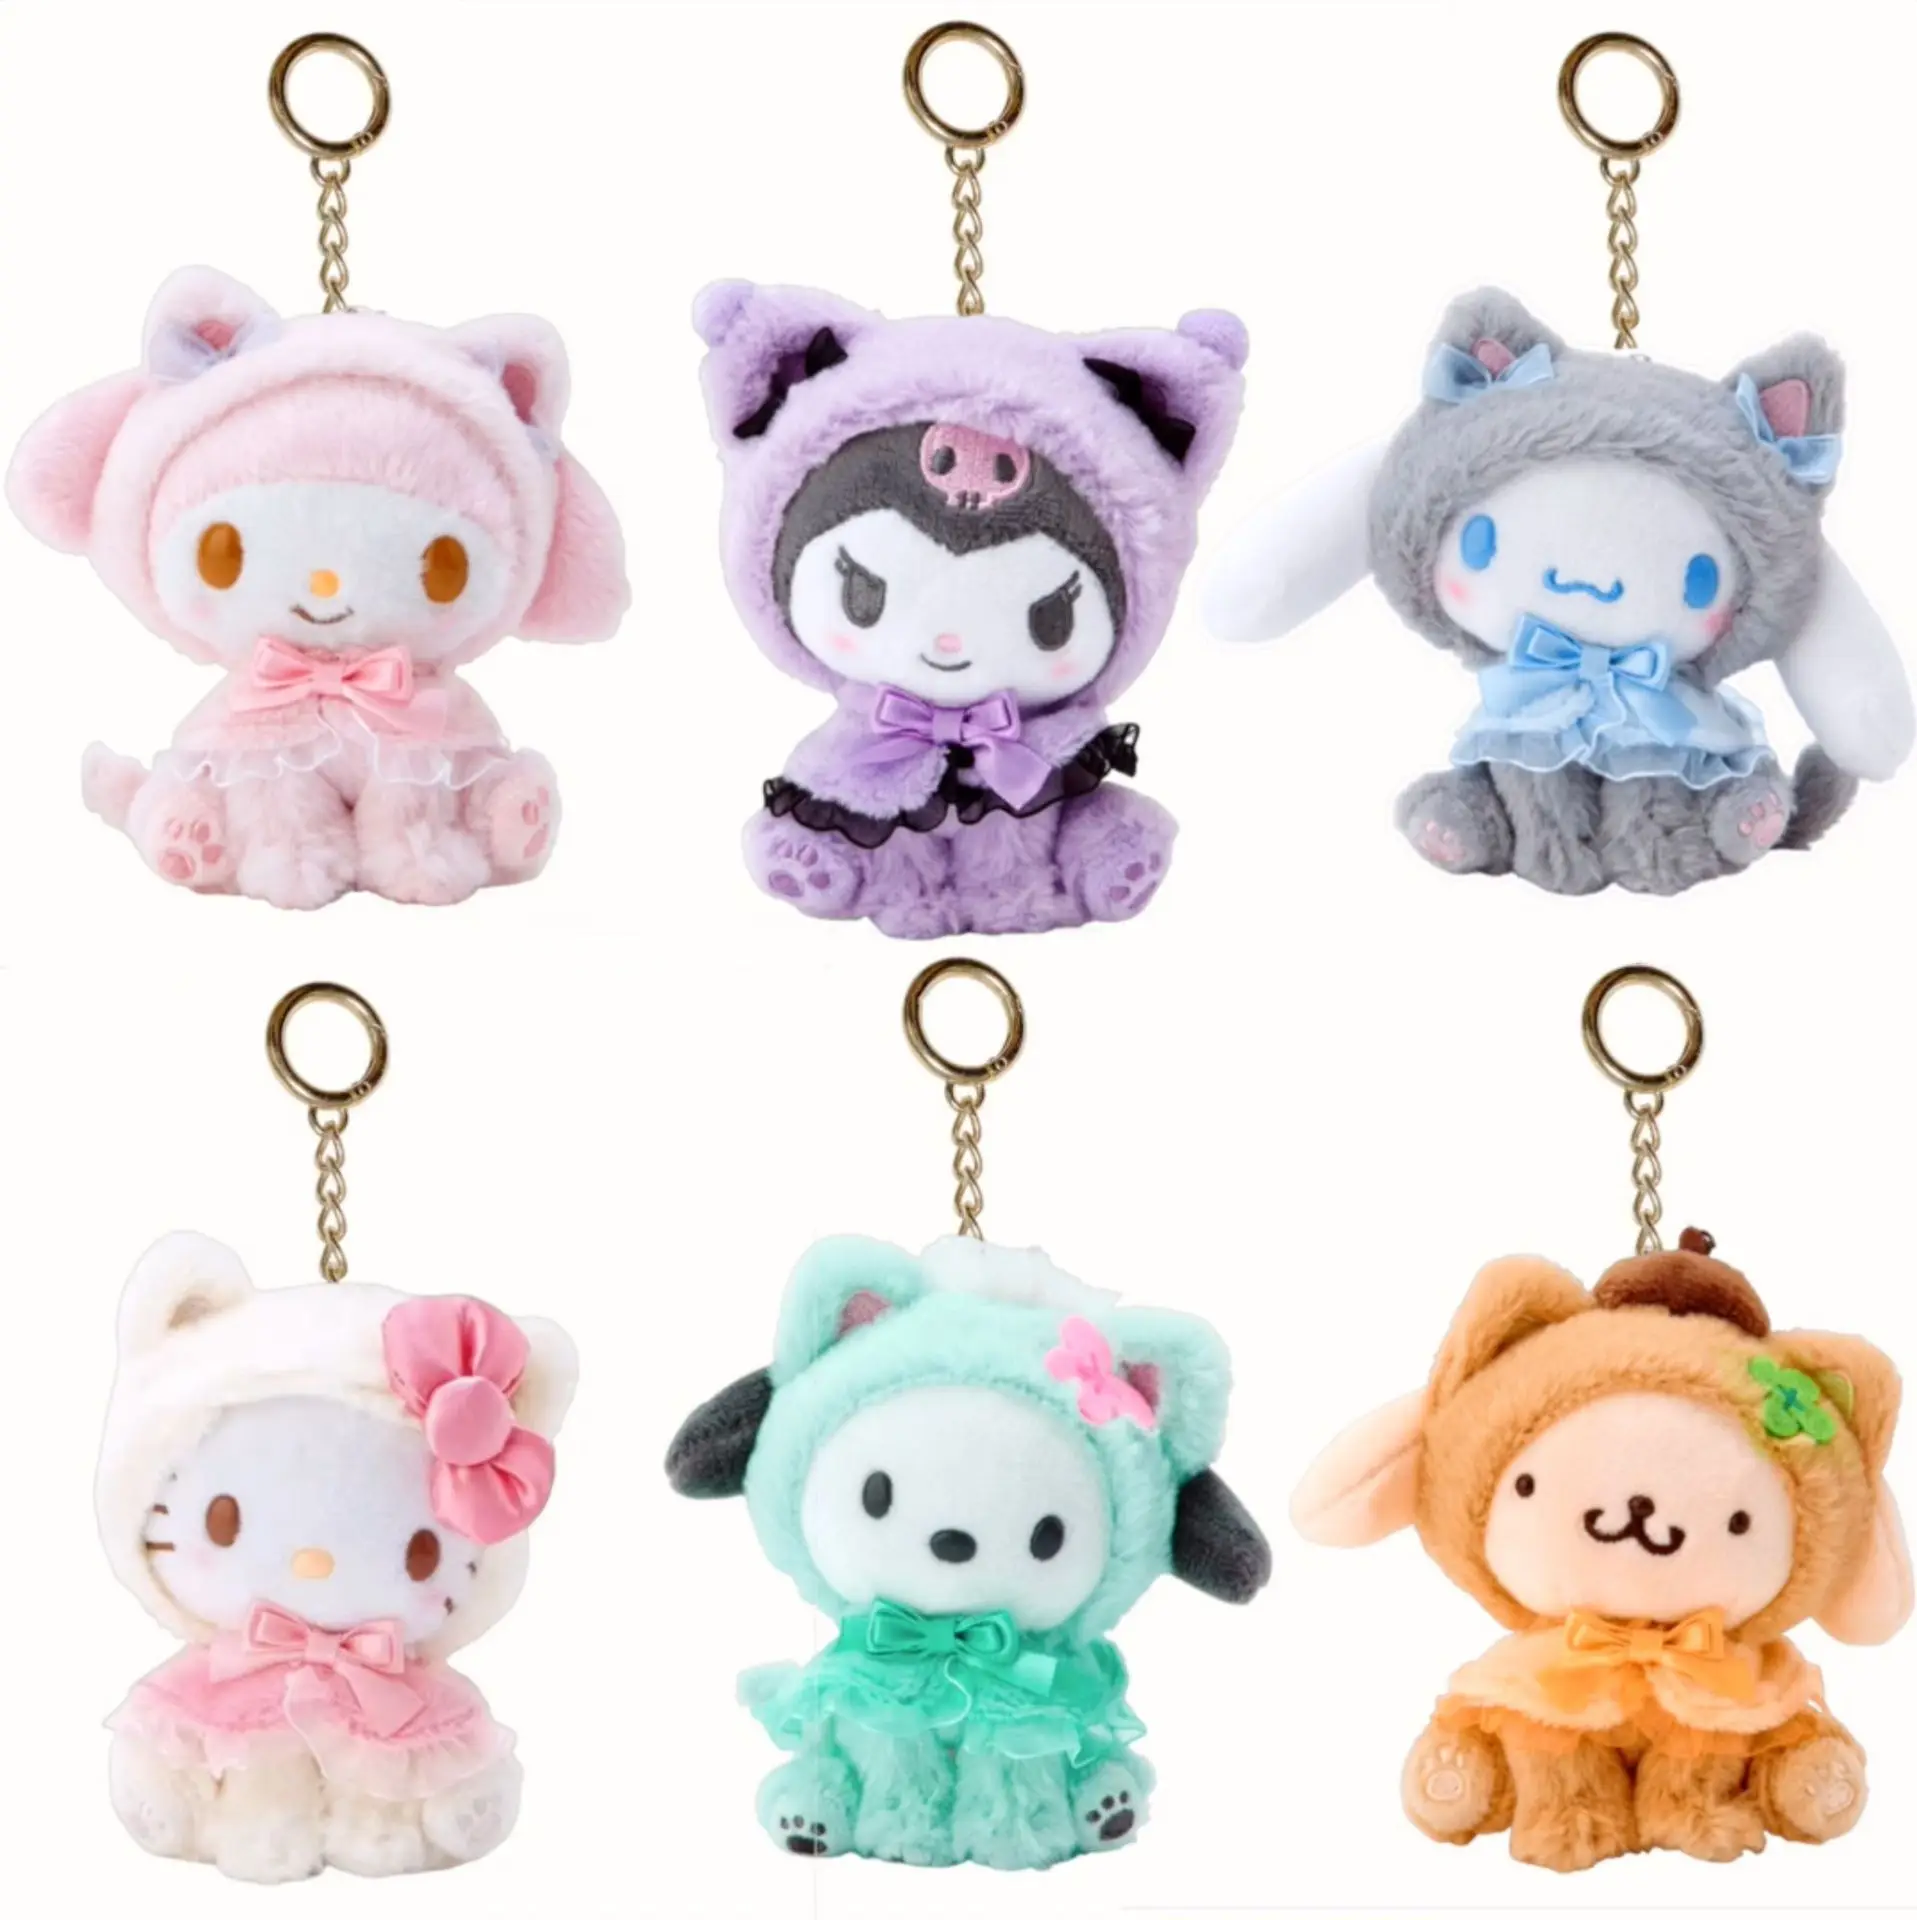 

Cute Stuffed Animal Sanrio Plush Kids Toys My Melody Kuromi Keychain Soft Plush Pendant